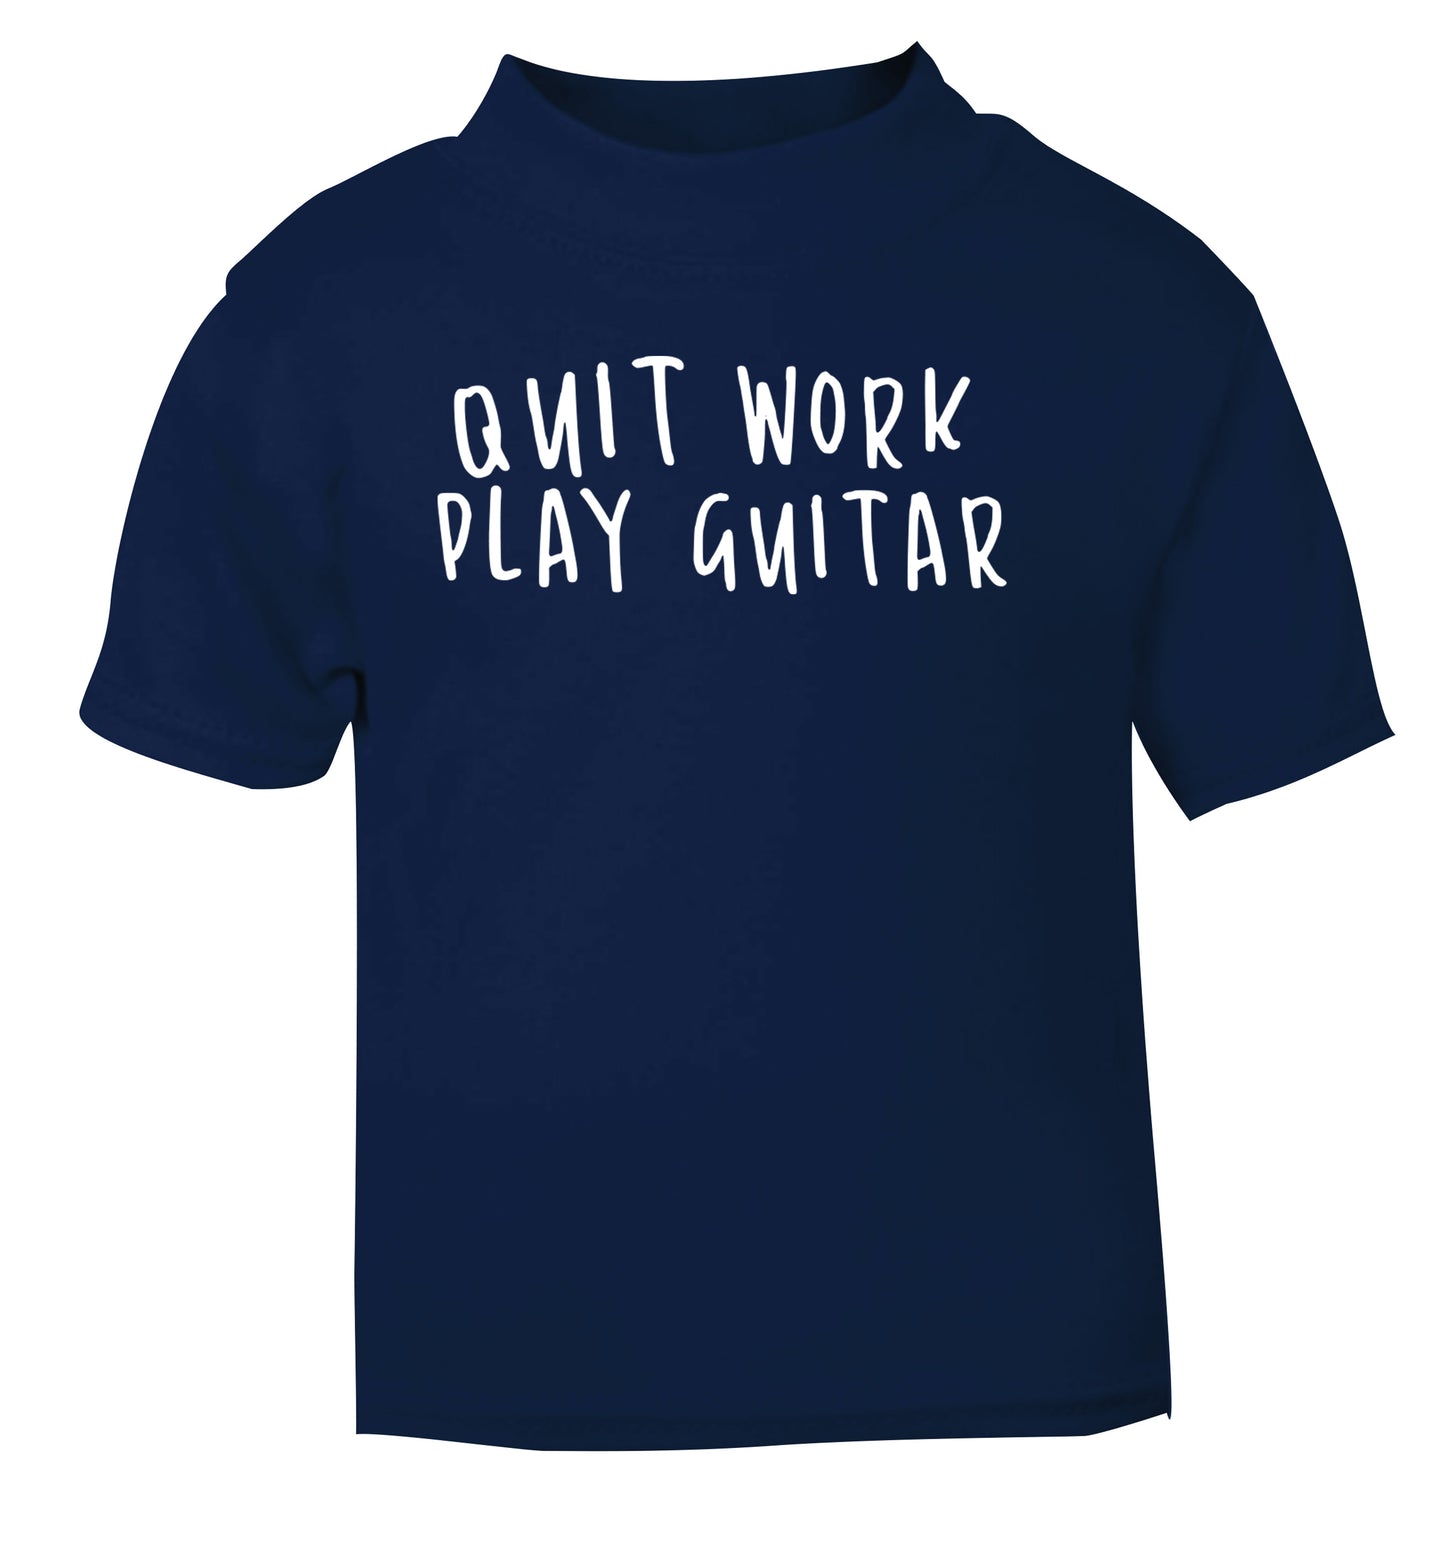 Quit work play guitar navy Baby Toddler Tshirt 2 Years